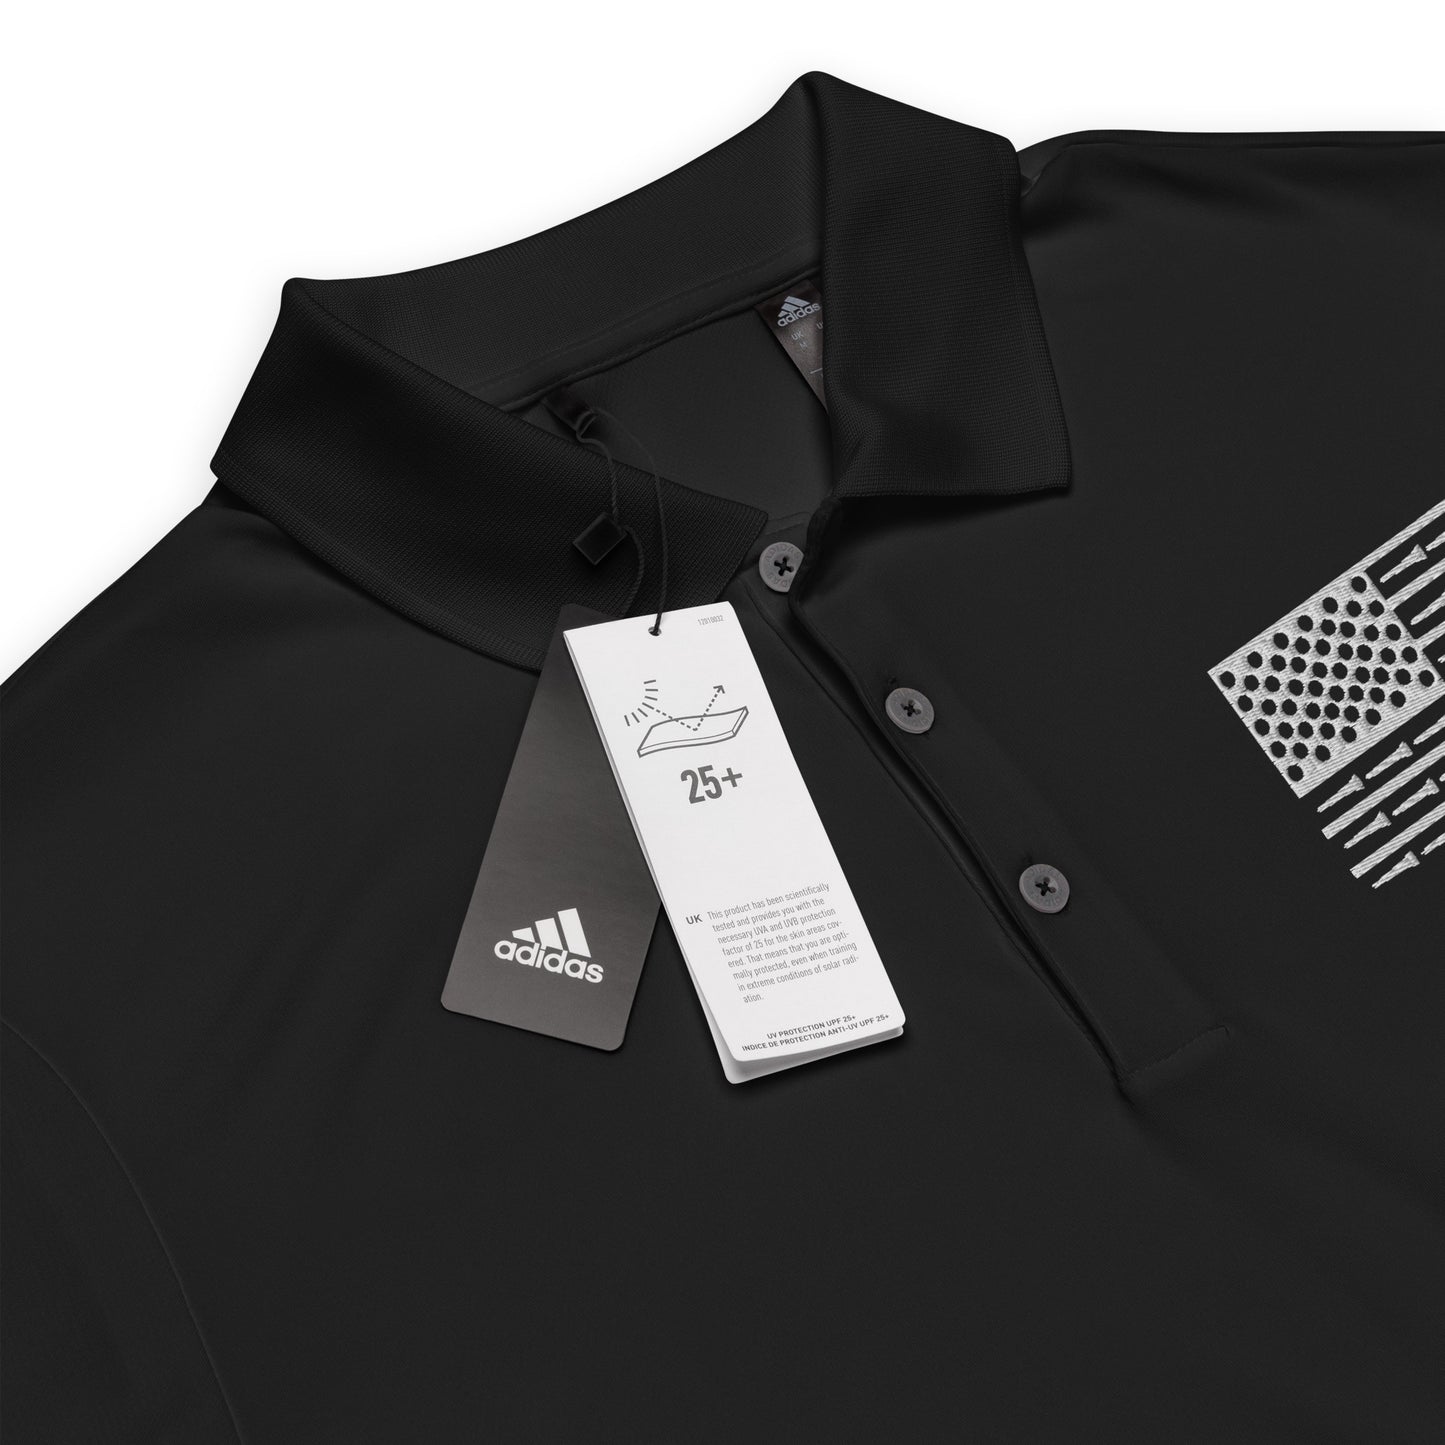 Adidas 'American Flag Golf' Performance Polo Shirt